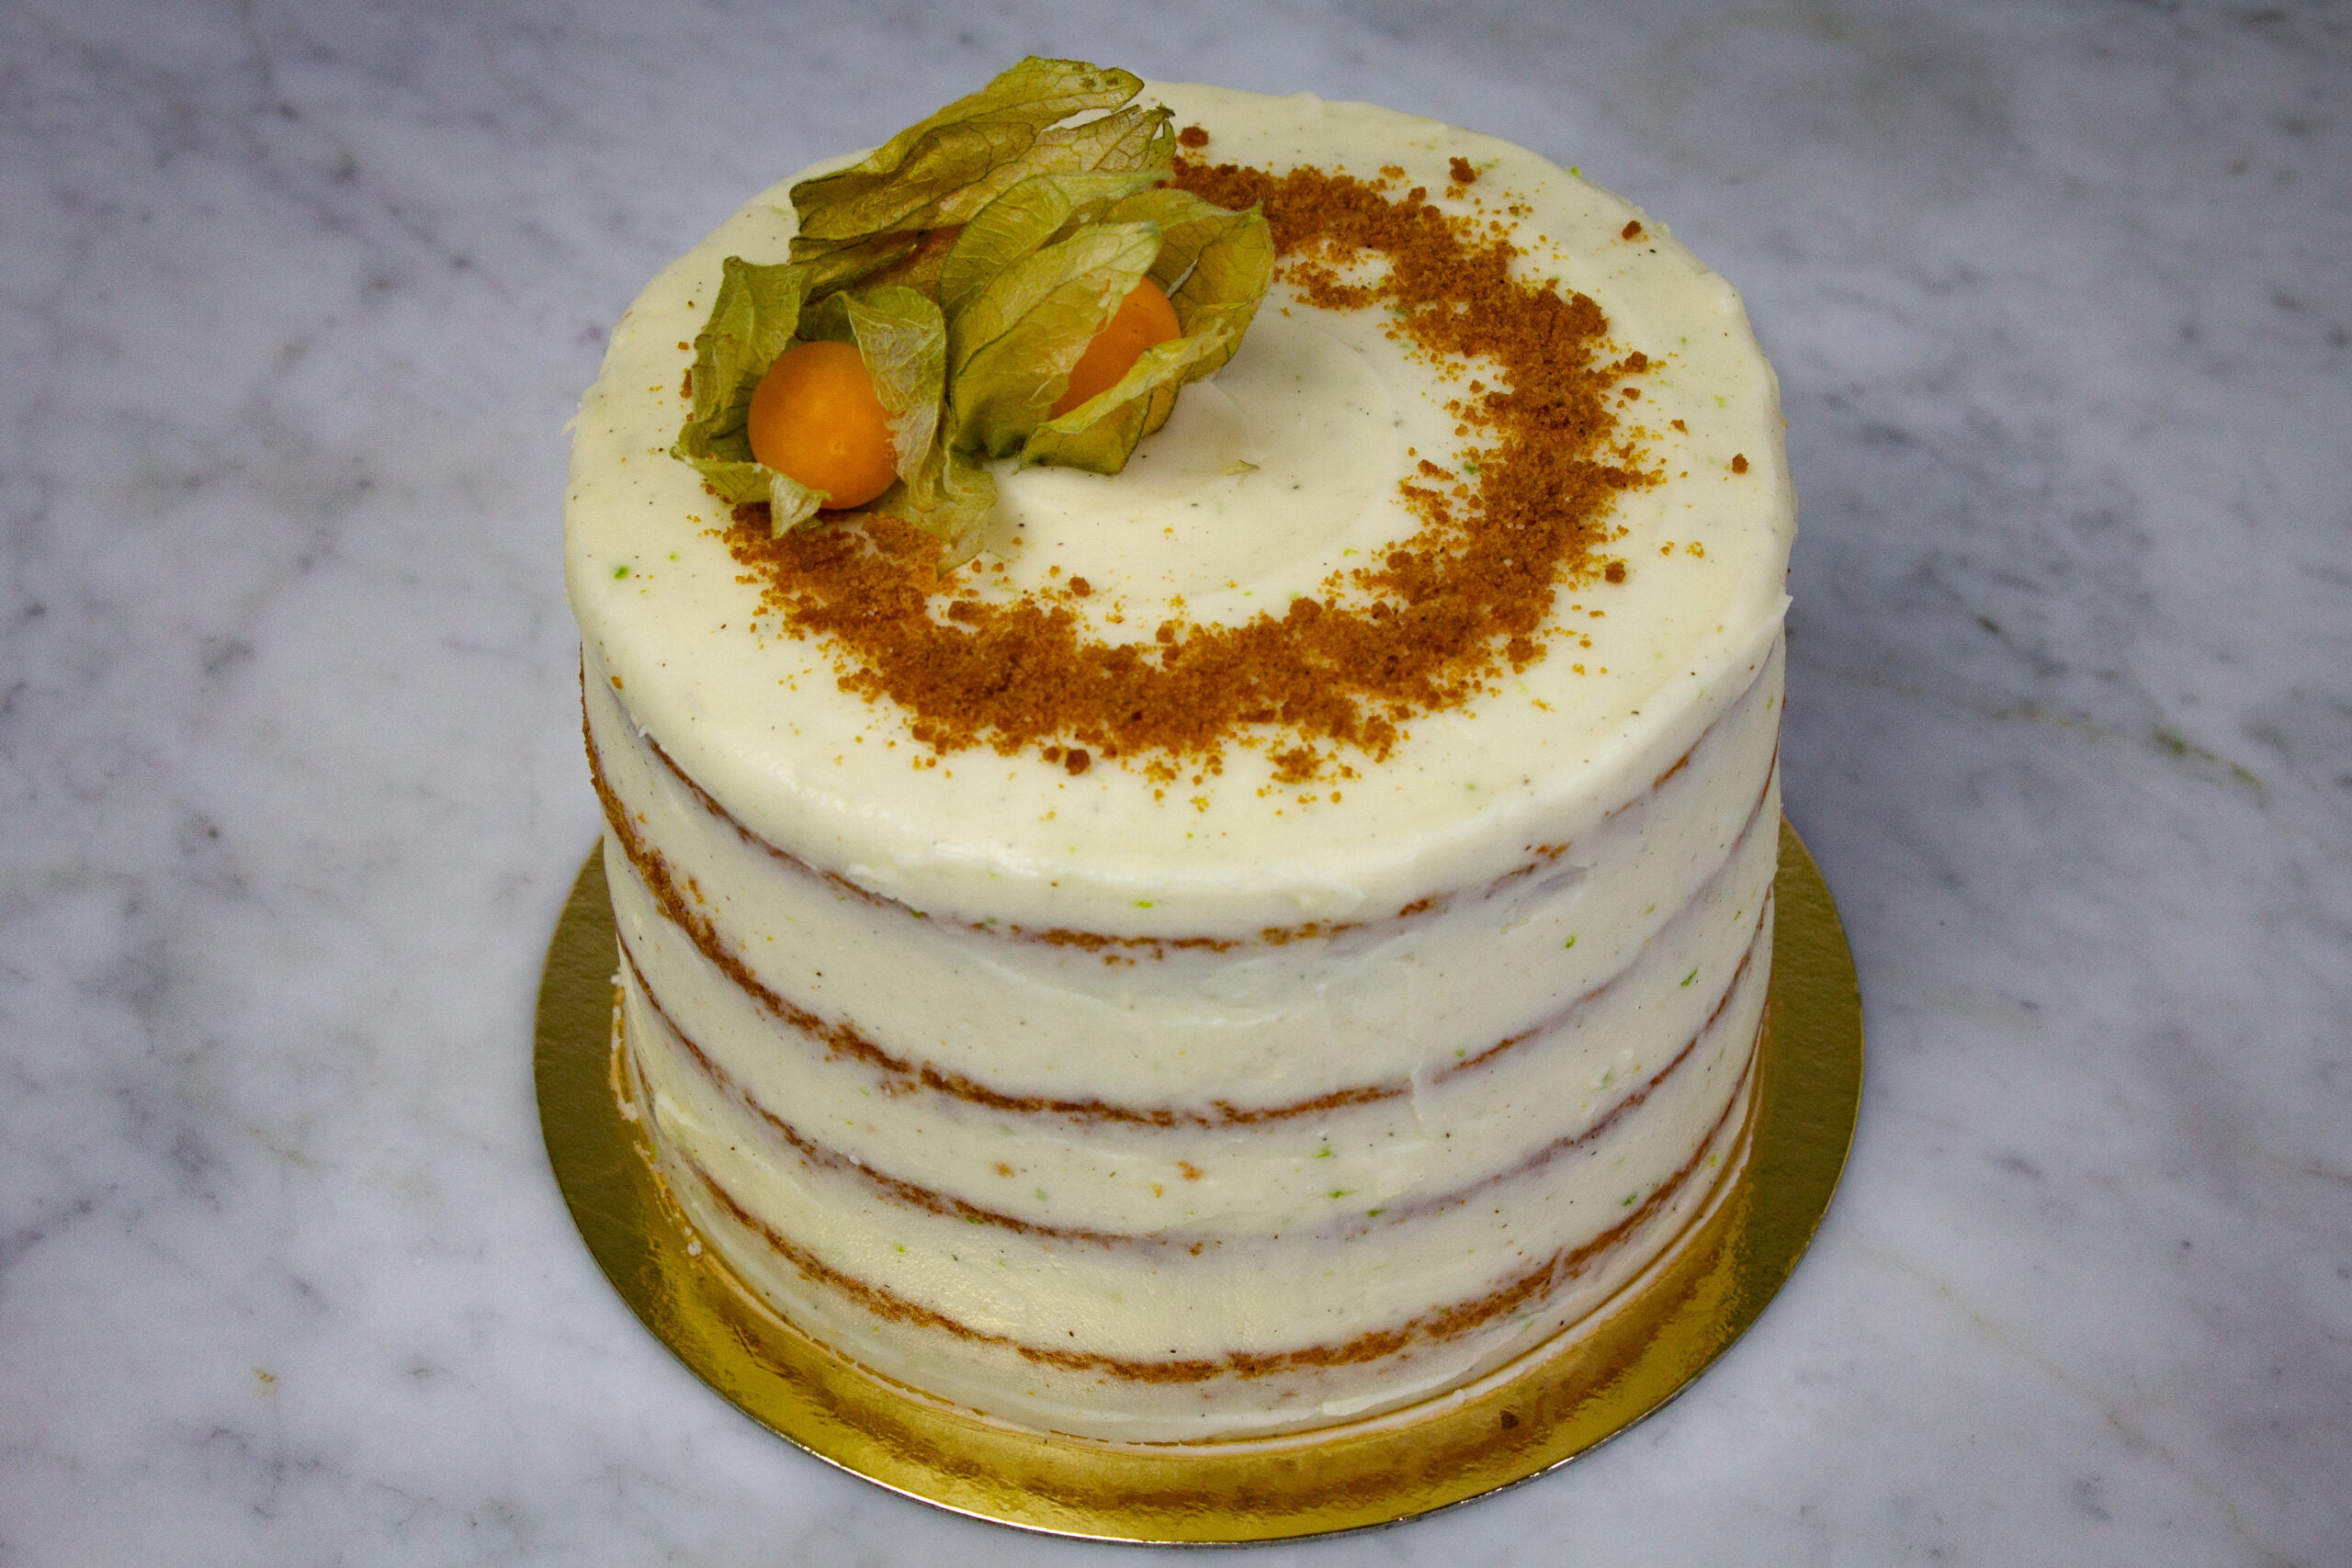 layered carrot cake